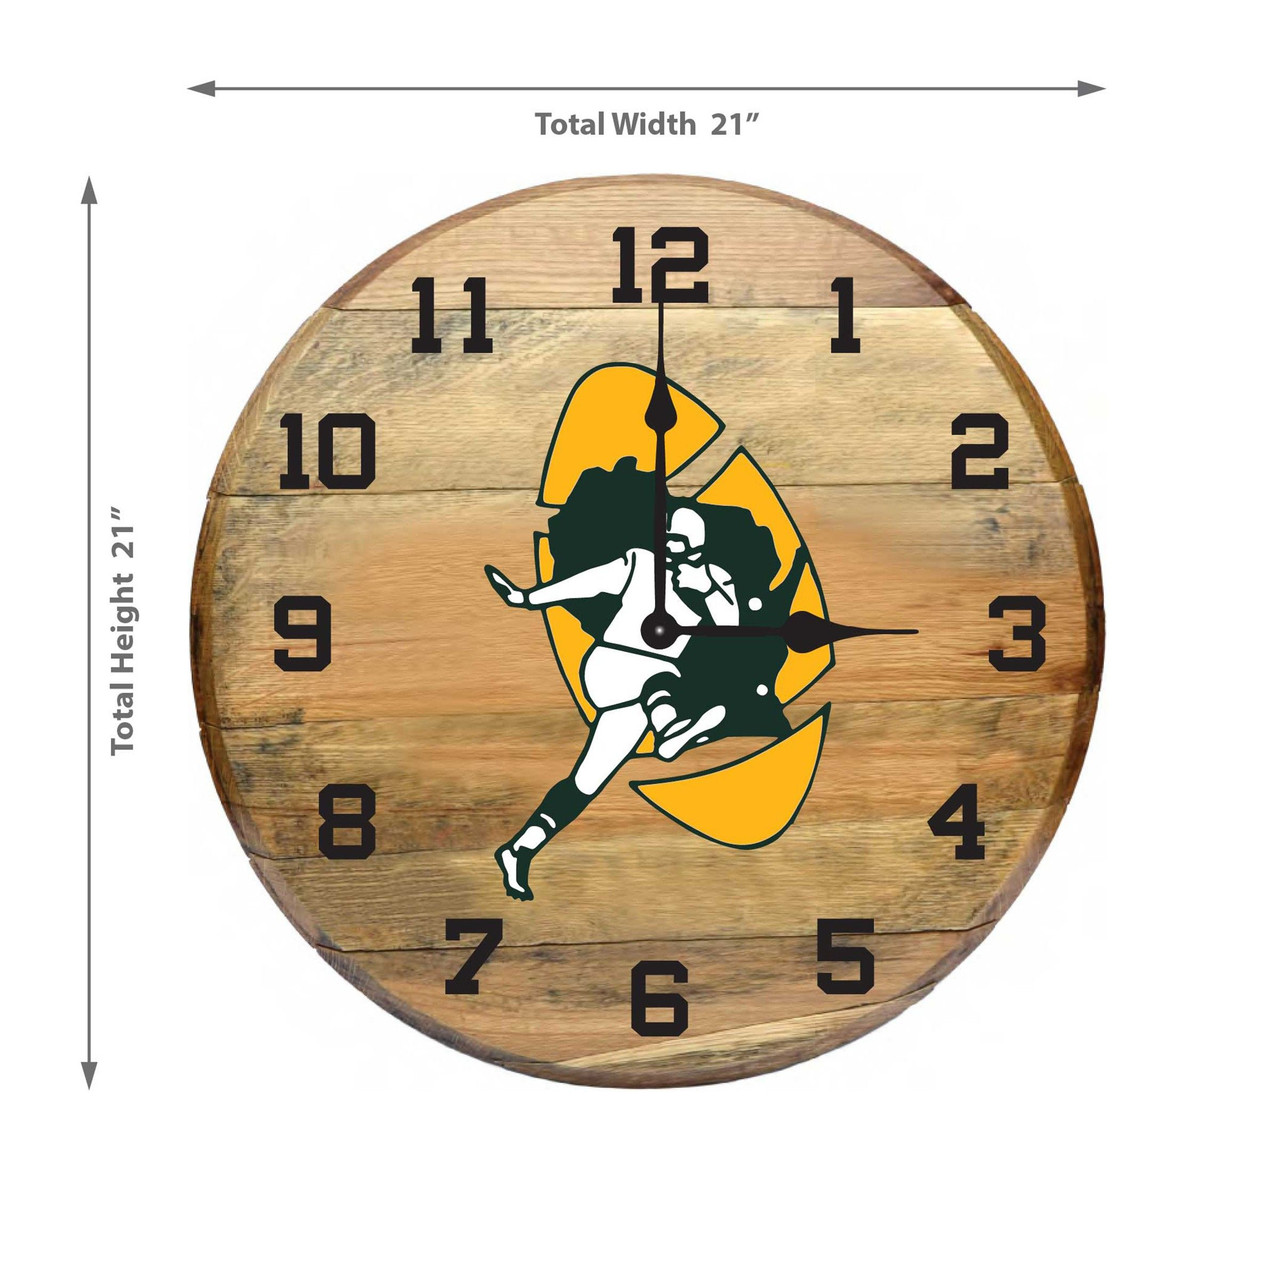 720801000862, 623-1001, Green, Bay, Packers, GB, 21", Barrel, Historical, Clock